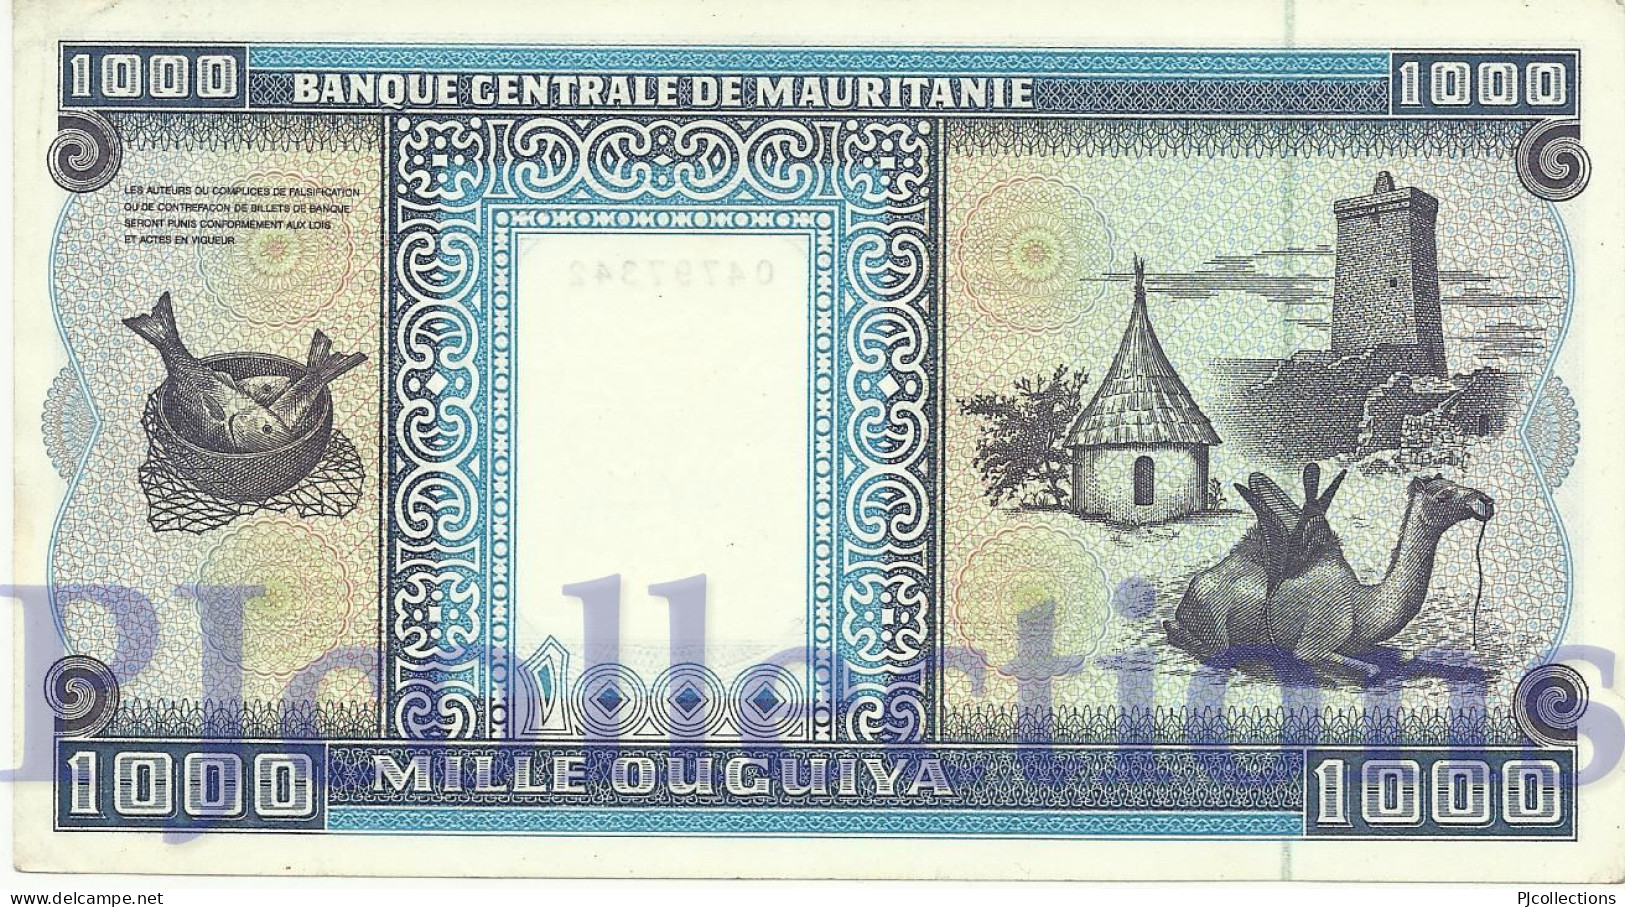 MAURITANIA 1000 OUGUIYA 2002 PICK 9c XF/AU - Mauritania